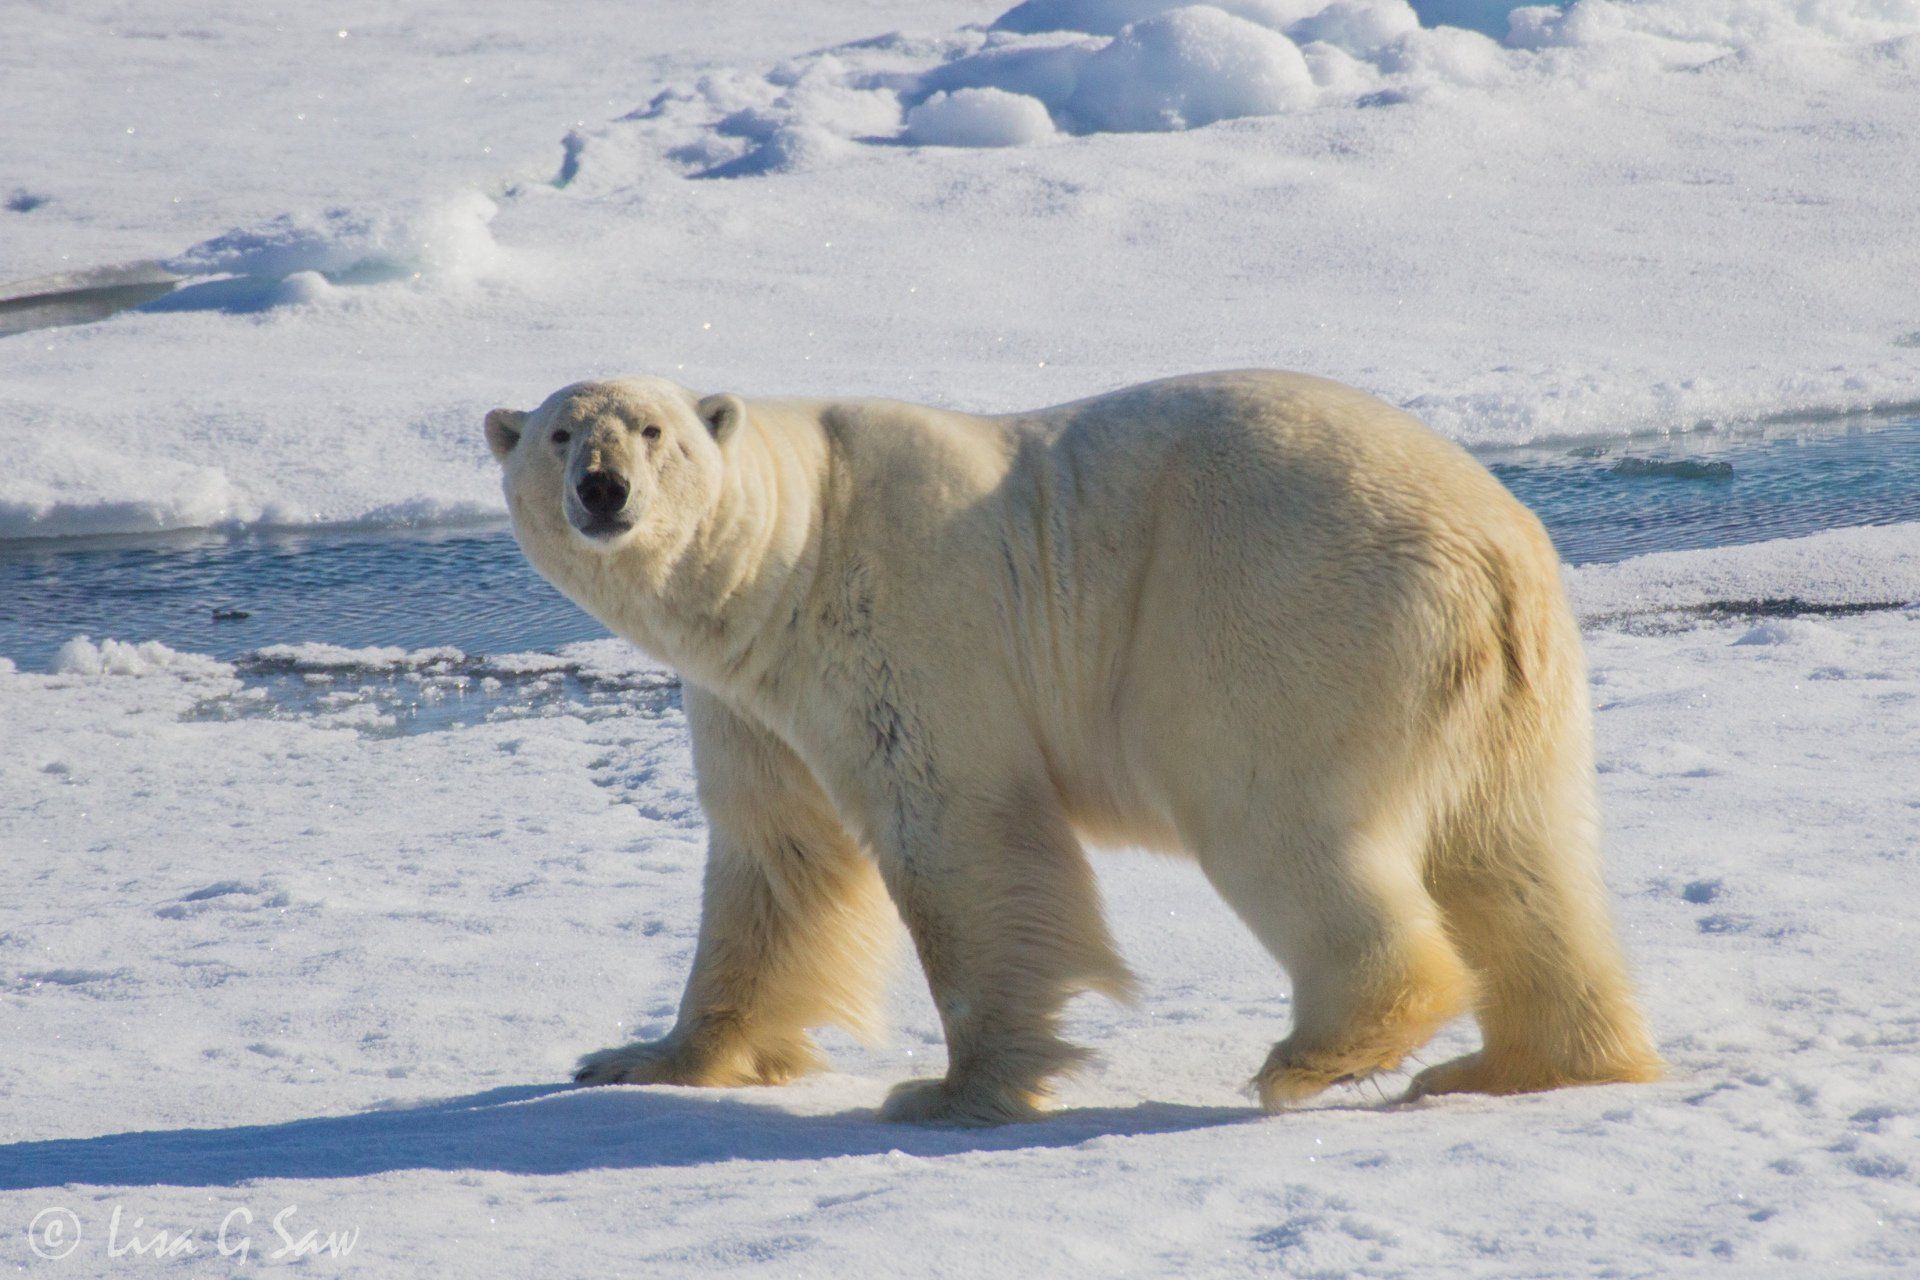 Polar Bear side on, walking past, glancing towards camera